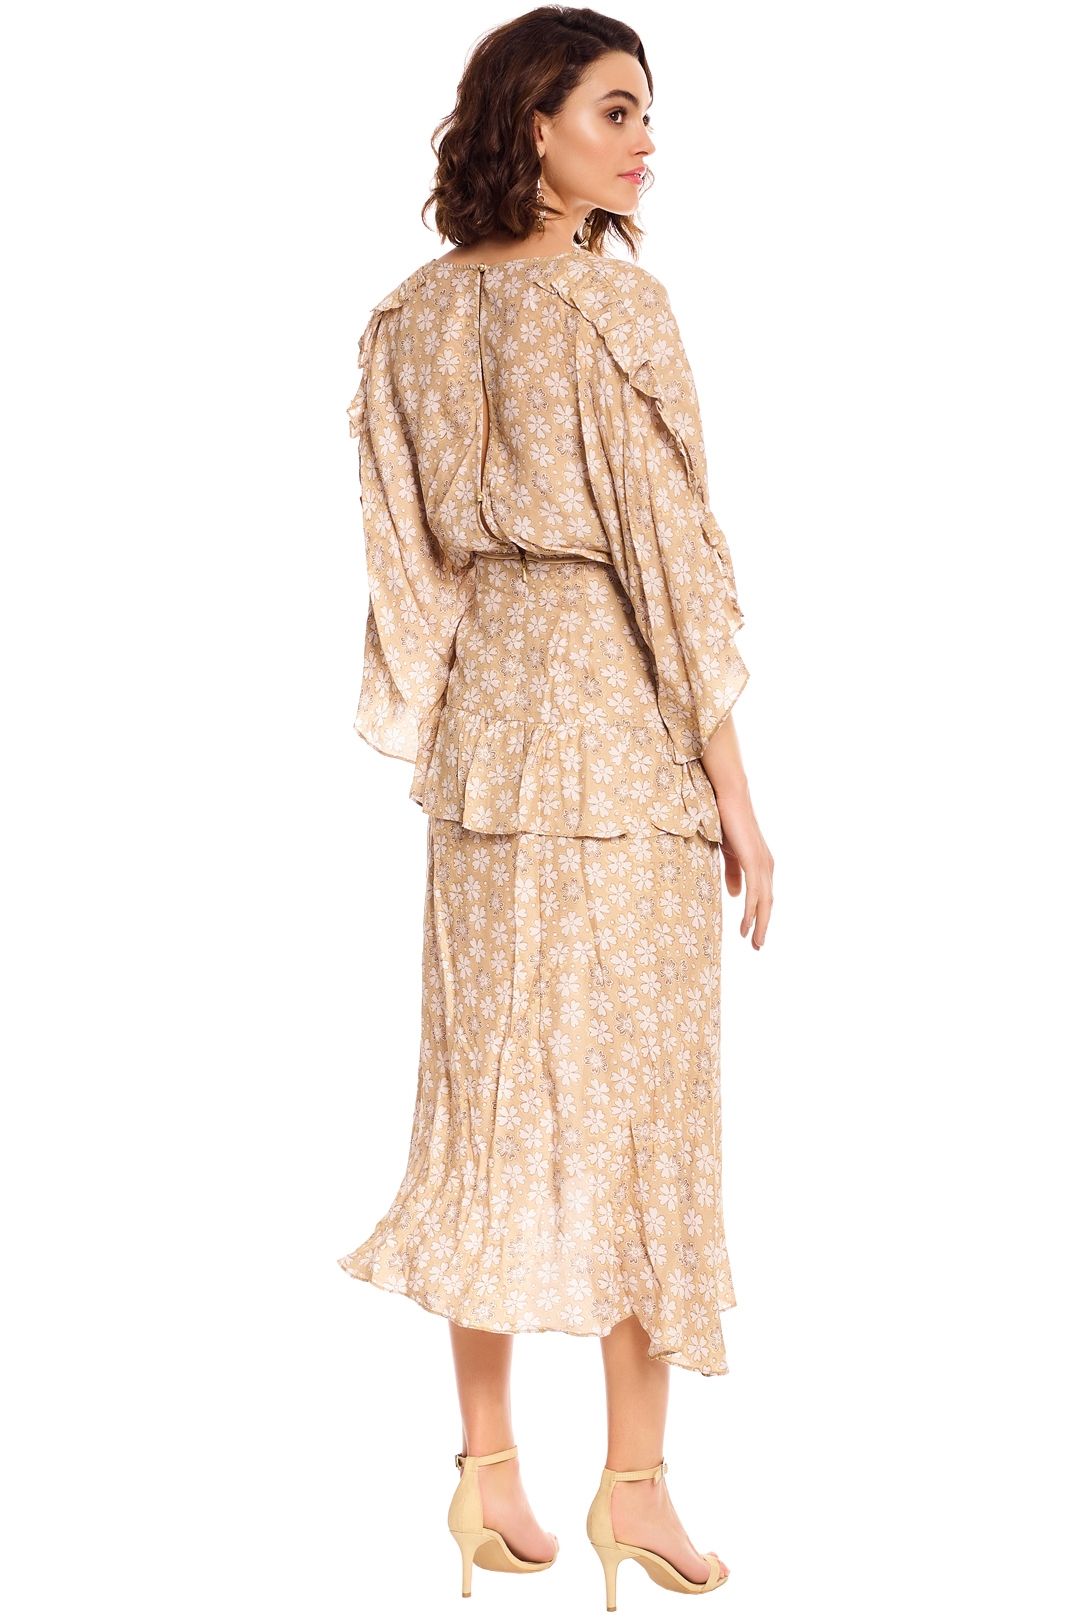 Talulah - Charismatic Woman Midi Dress - Nude Floral - Back